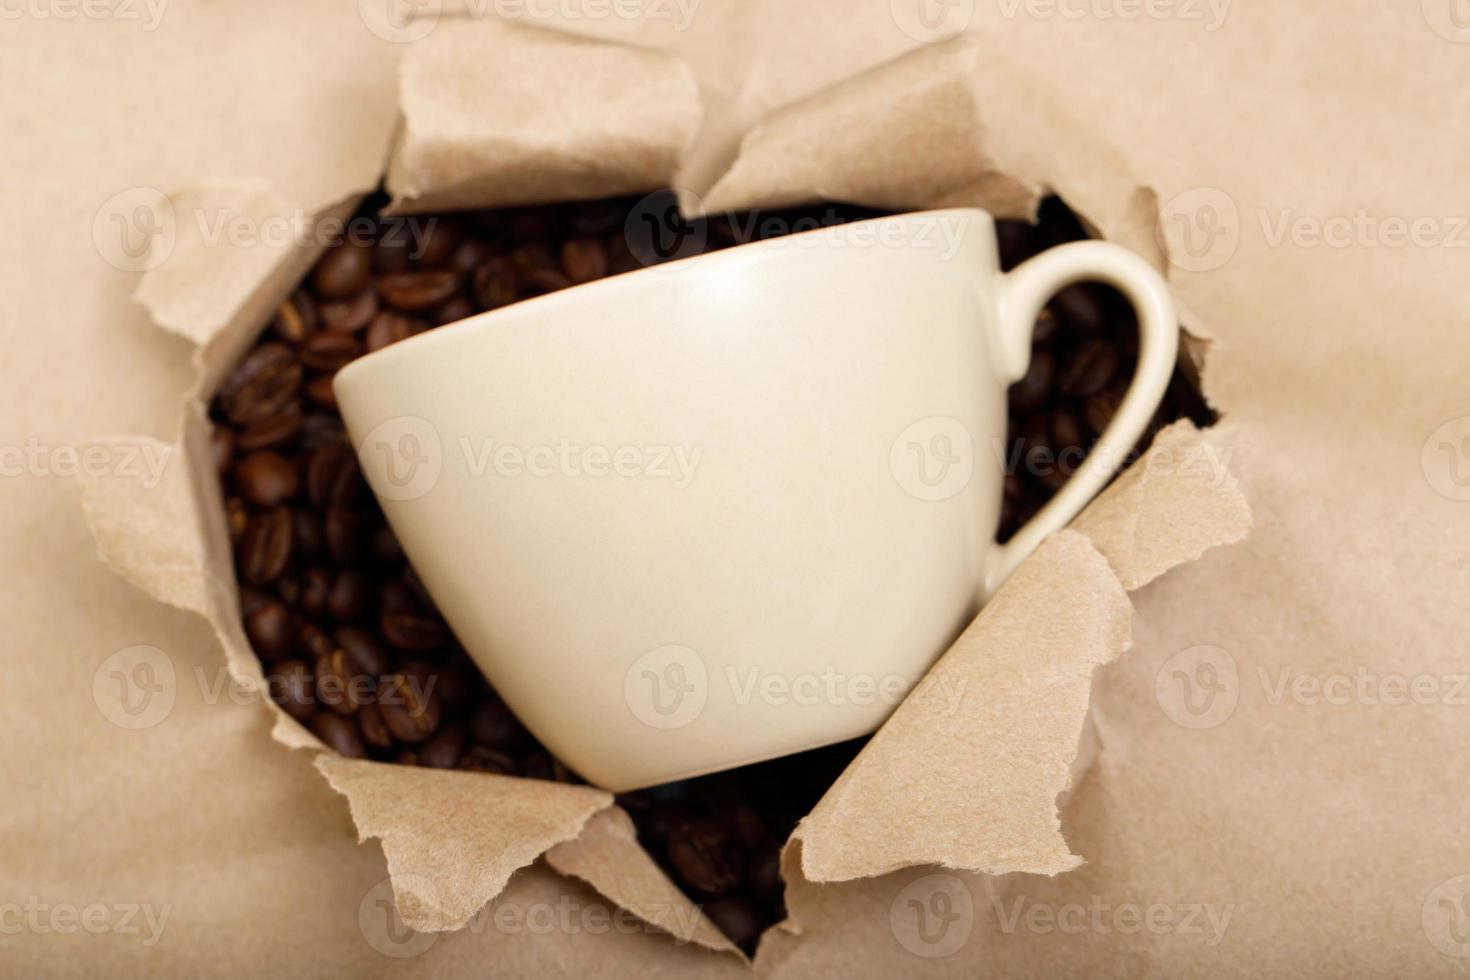 nyligen rostad kaffe bönor i en kopp foto